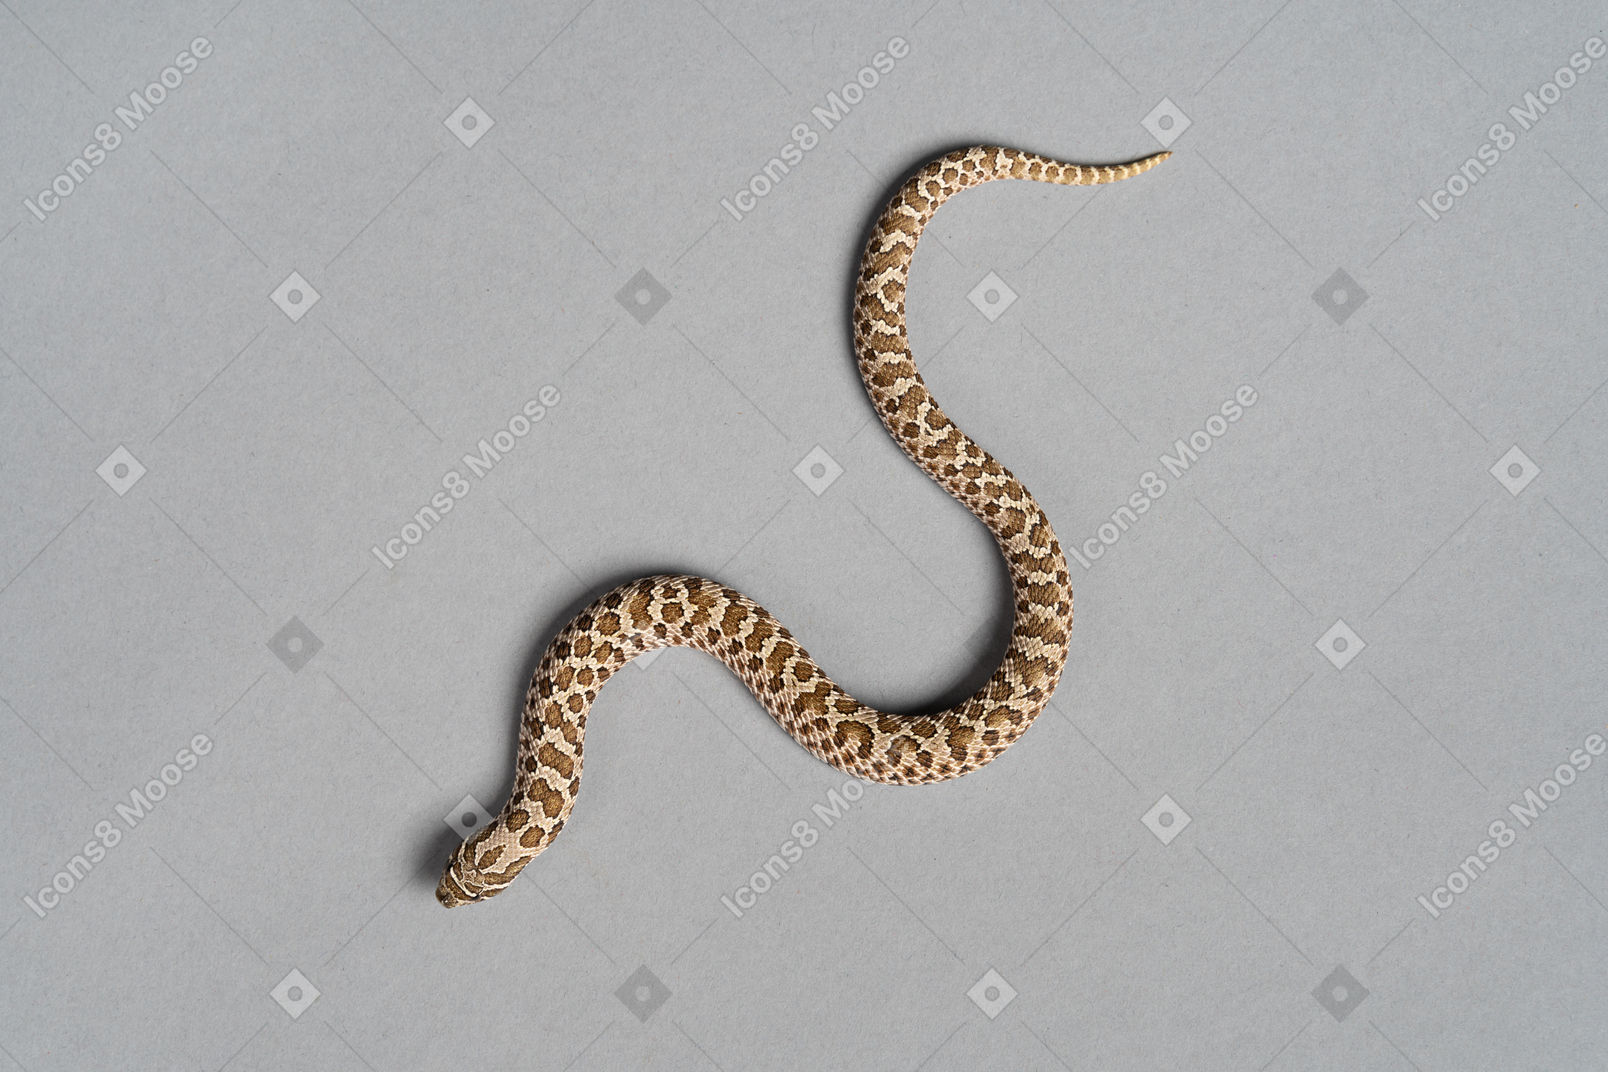 Brown snake on grey background